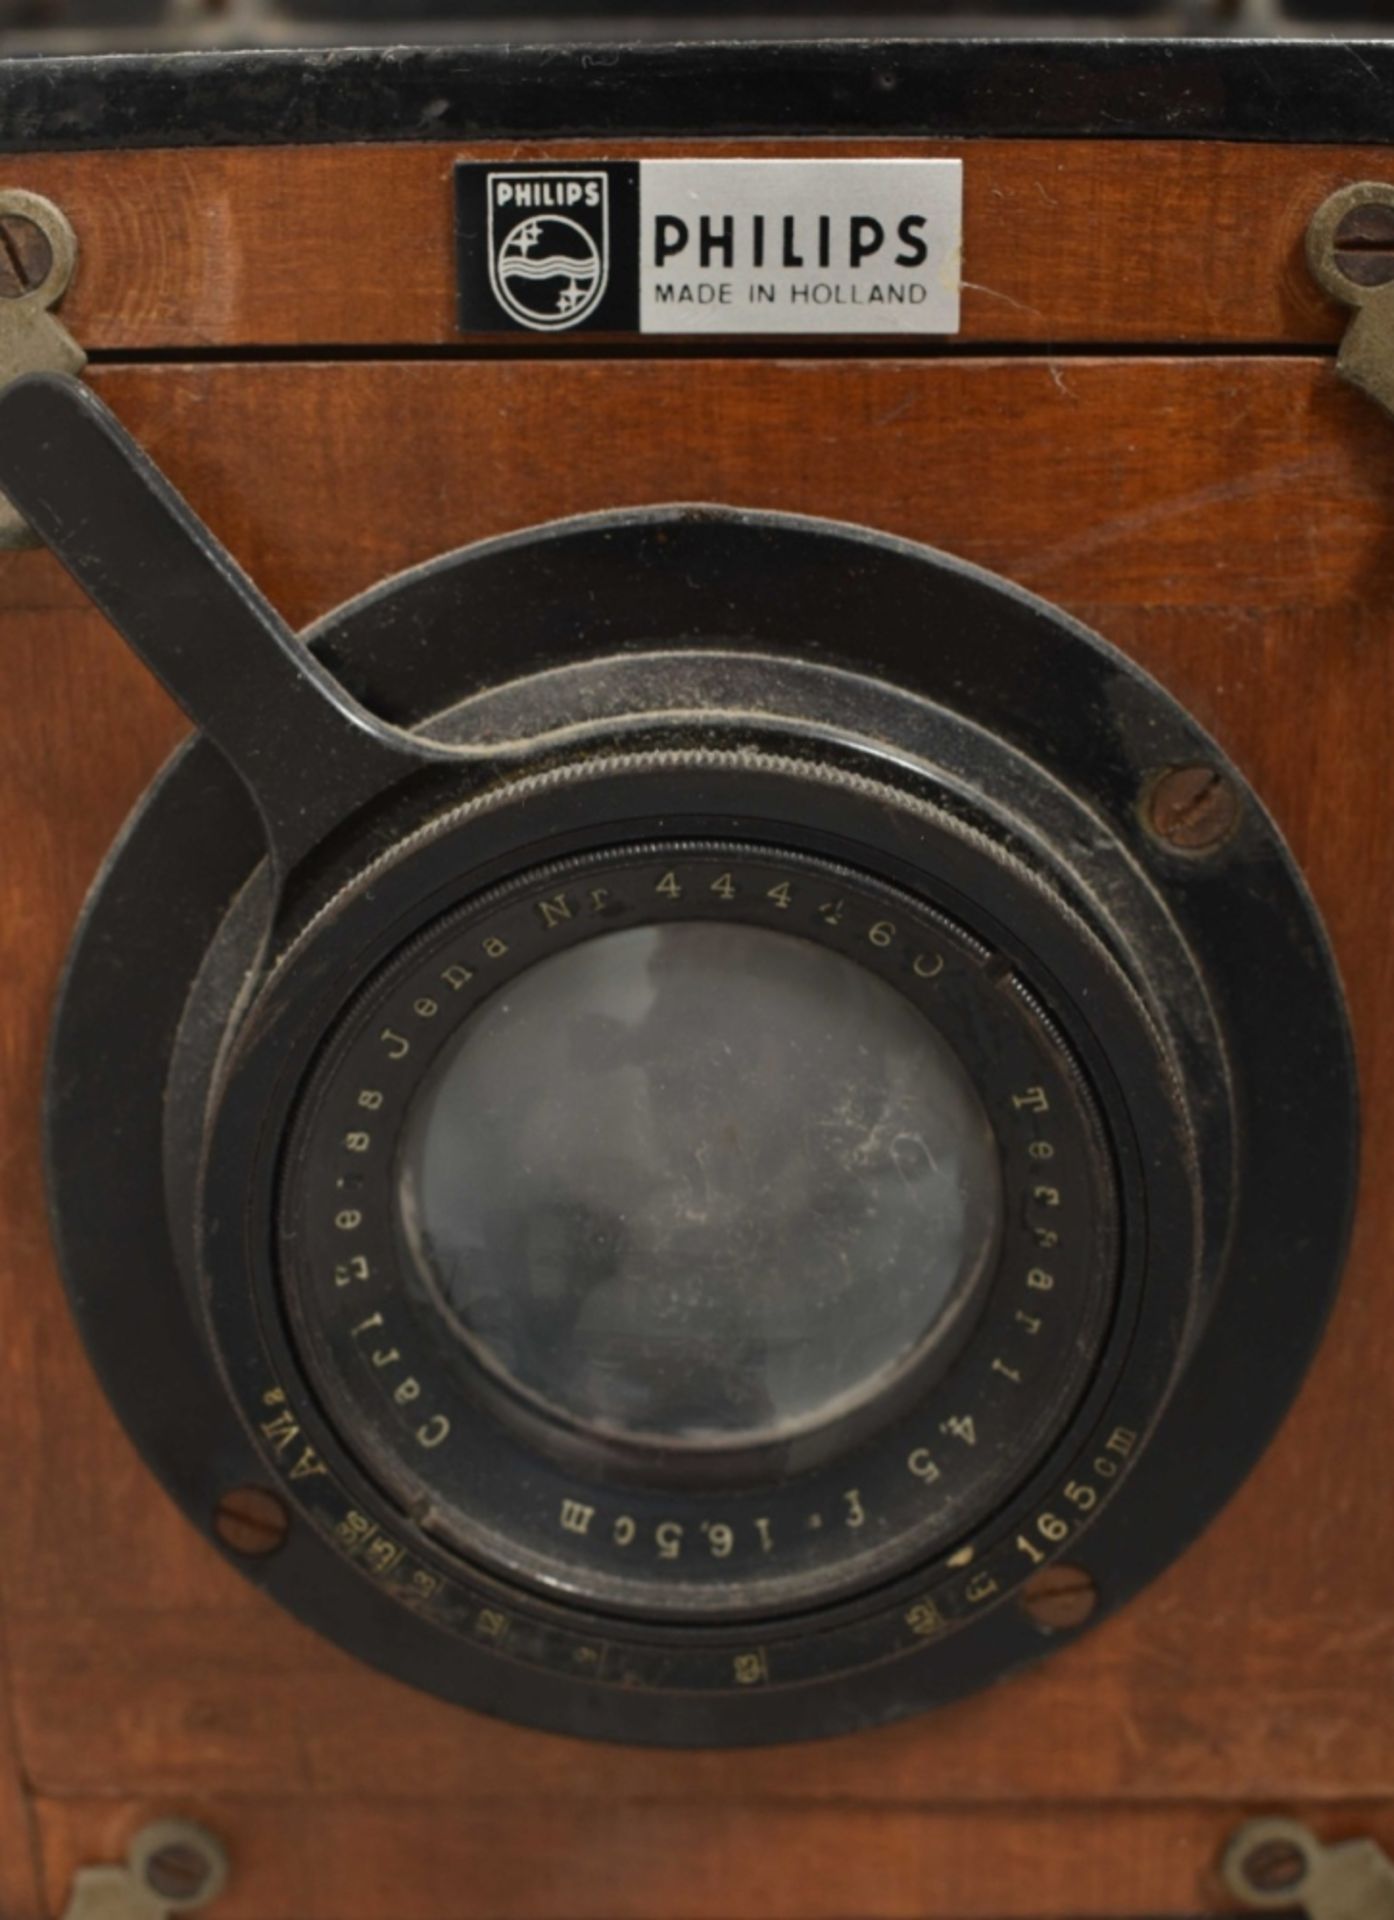 [Magic lantern] Early 20th century magic lantern and camera paraphernalia - Image 4 of 7